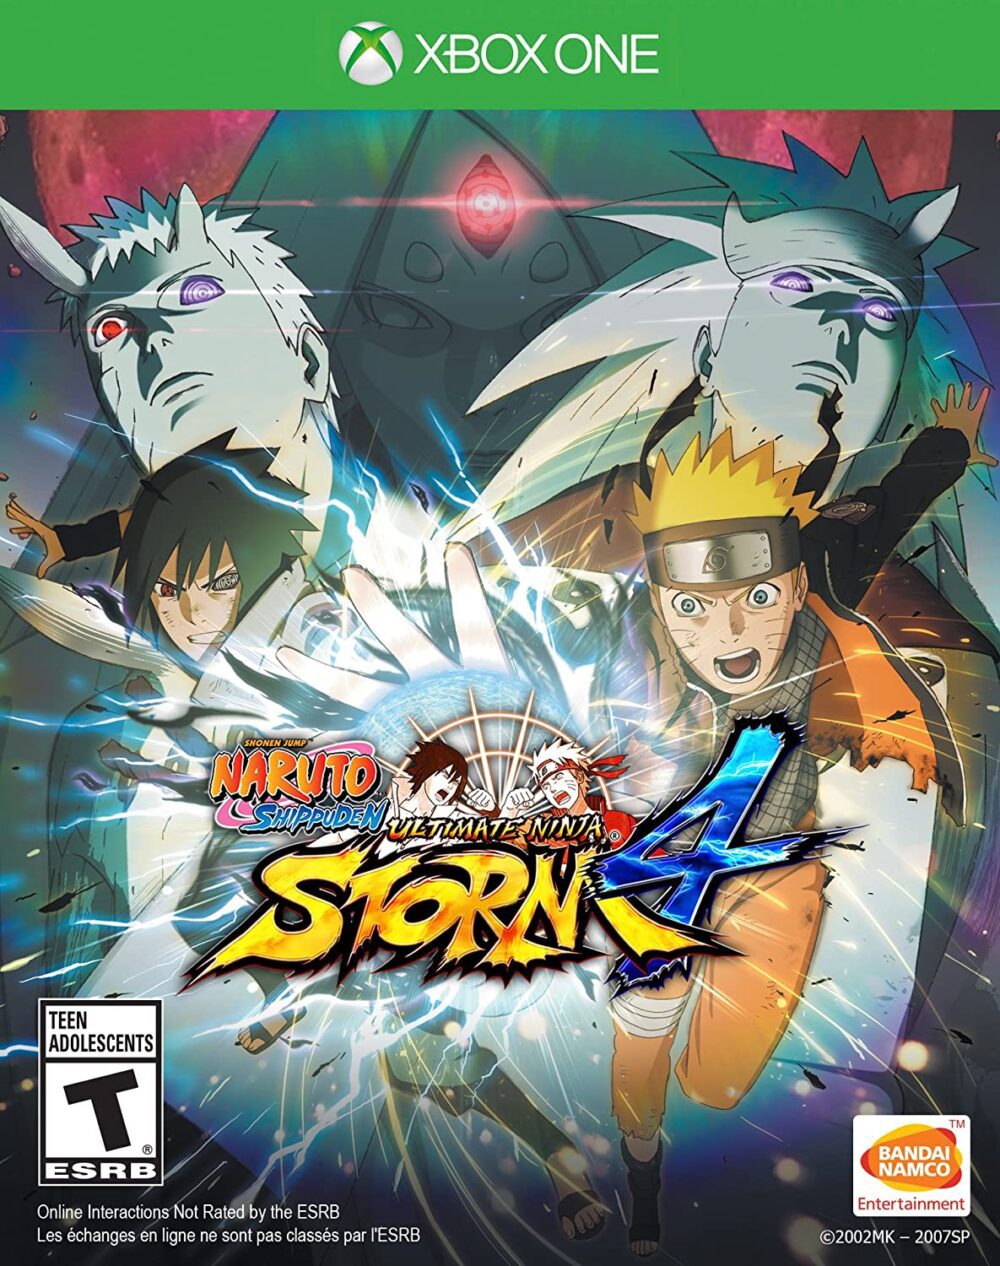 Naruto Shippuden: Ultimate Ninja Storm 4 for Xbox One